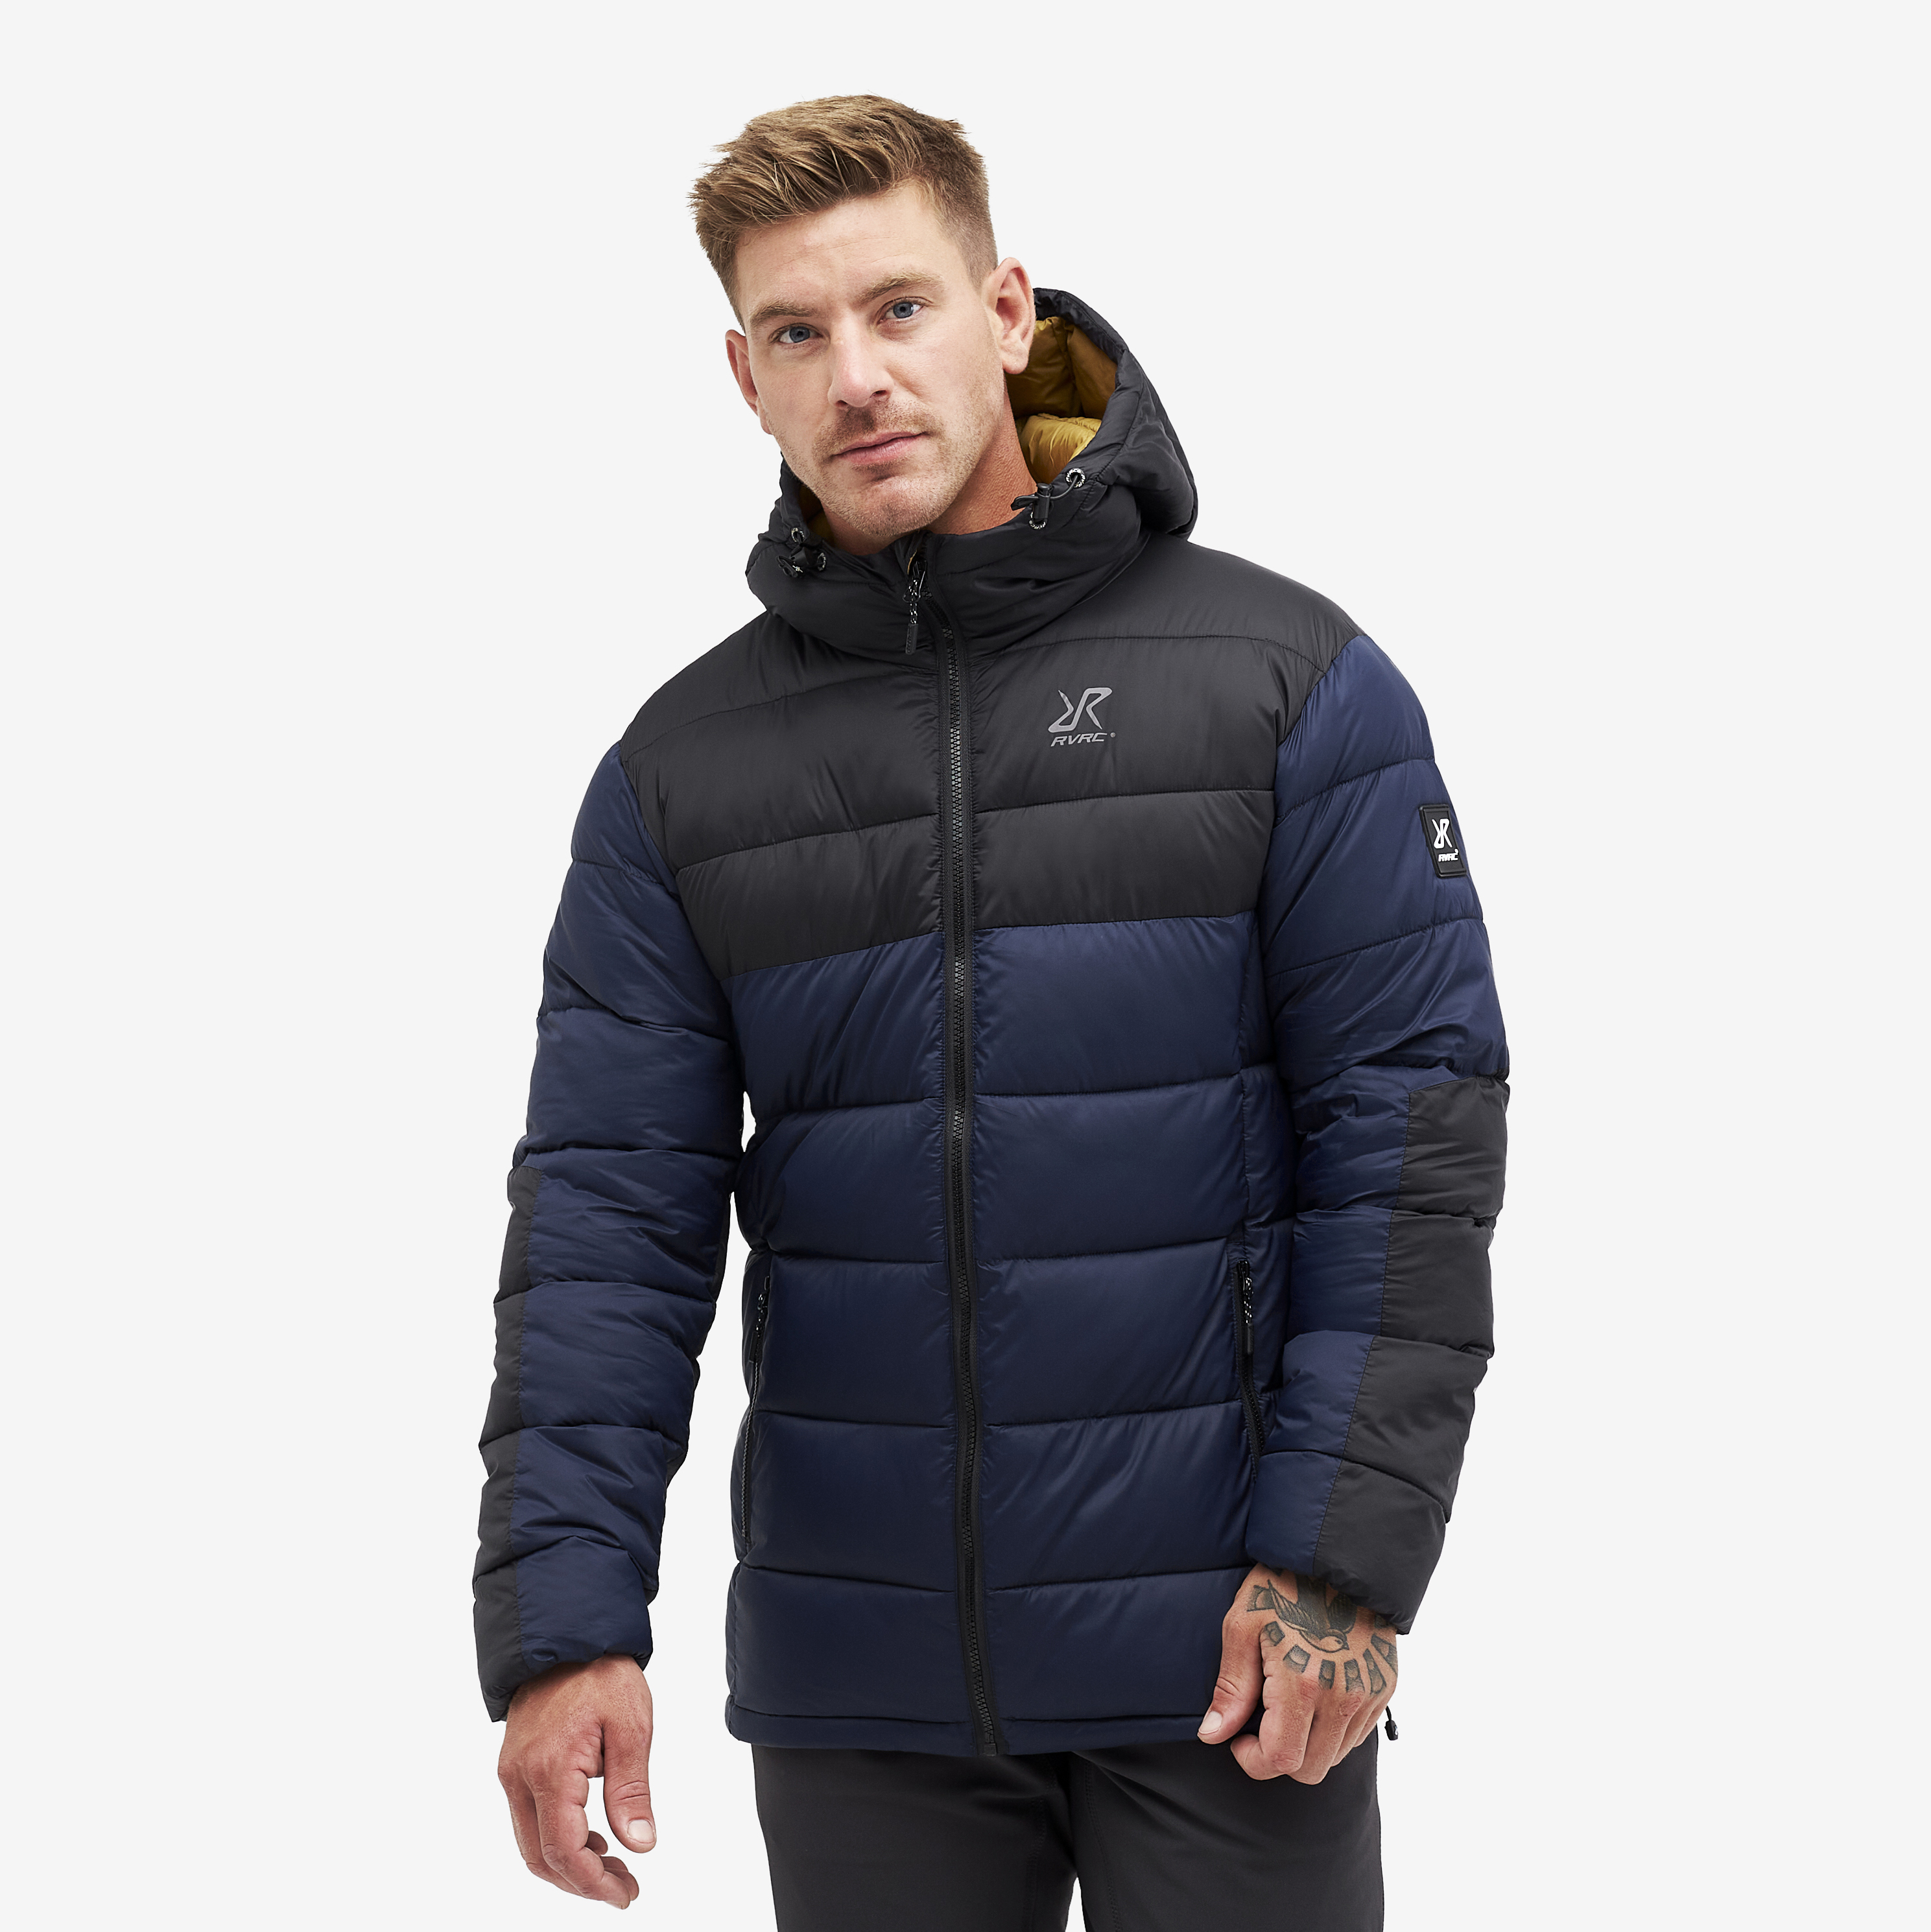 Mongoose Jacket – Herr – Navy Storlek:XL – Vinterjackor